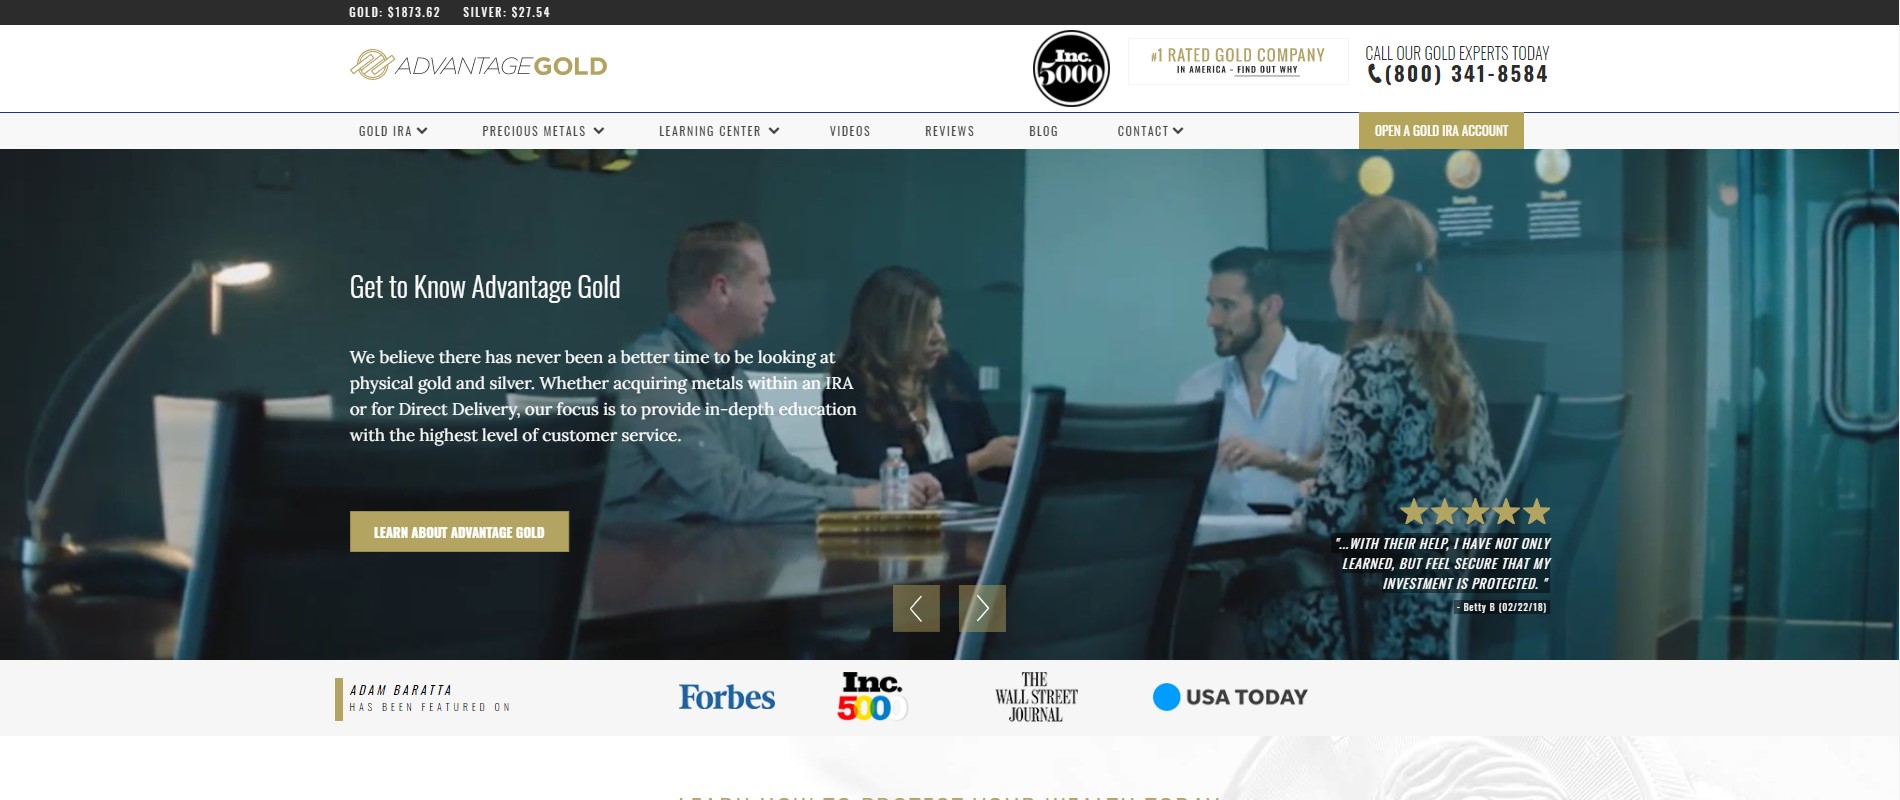 Advantage Gold website